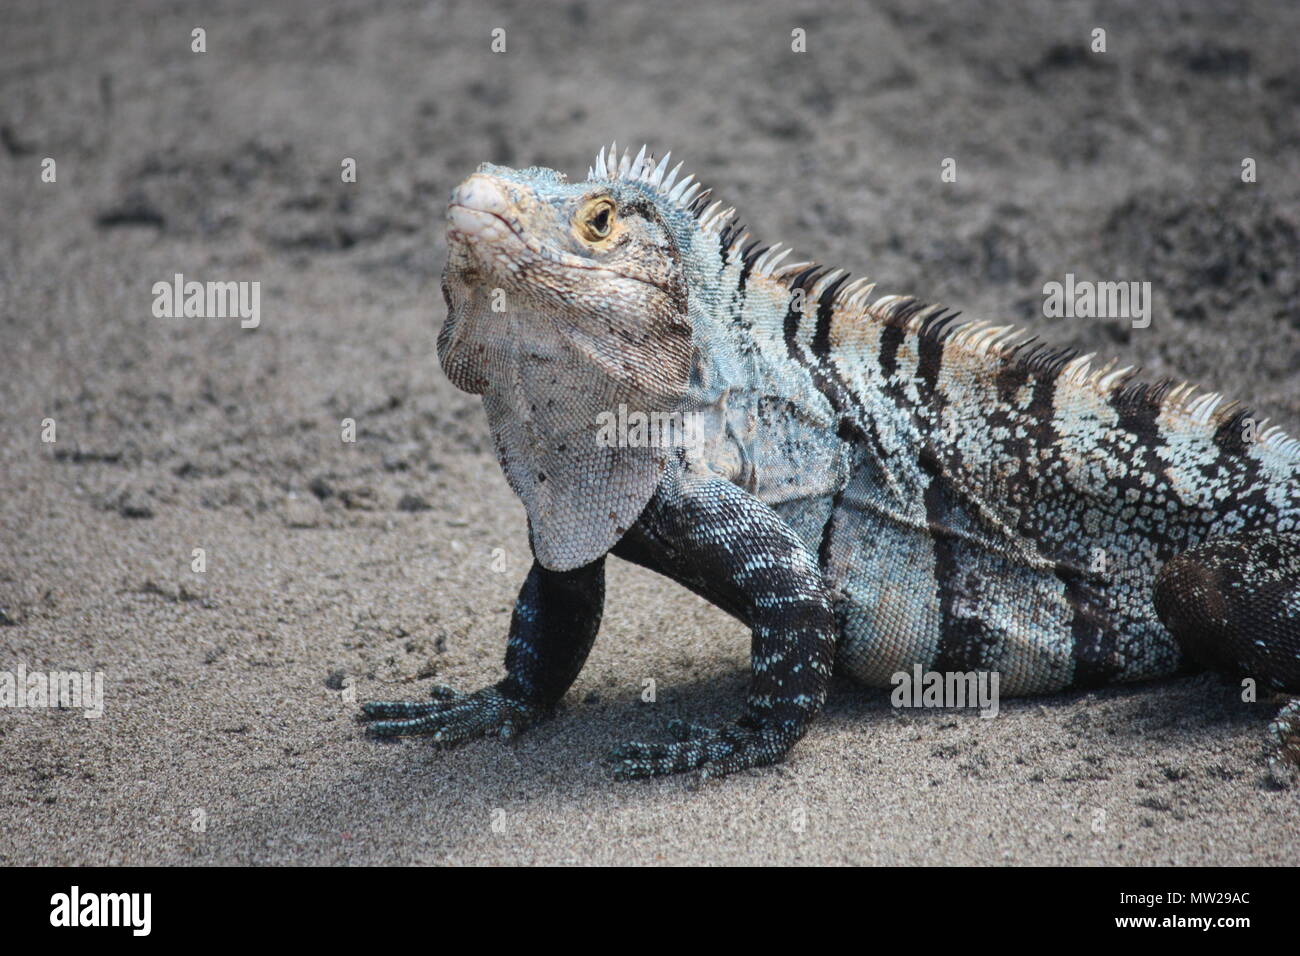 Iguana sitting on the beach Stock Photo